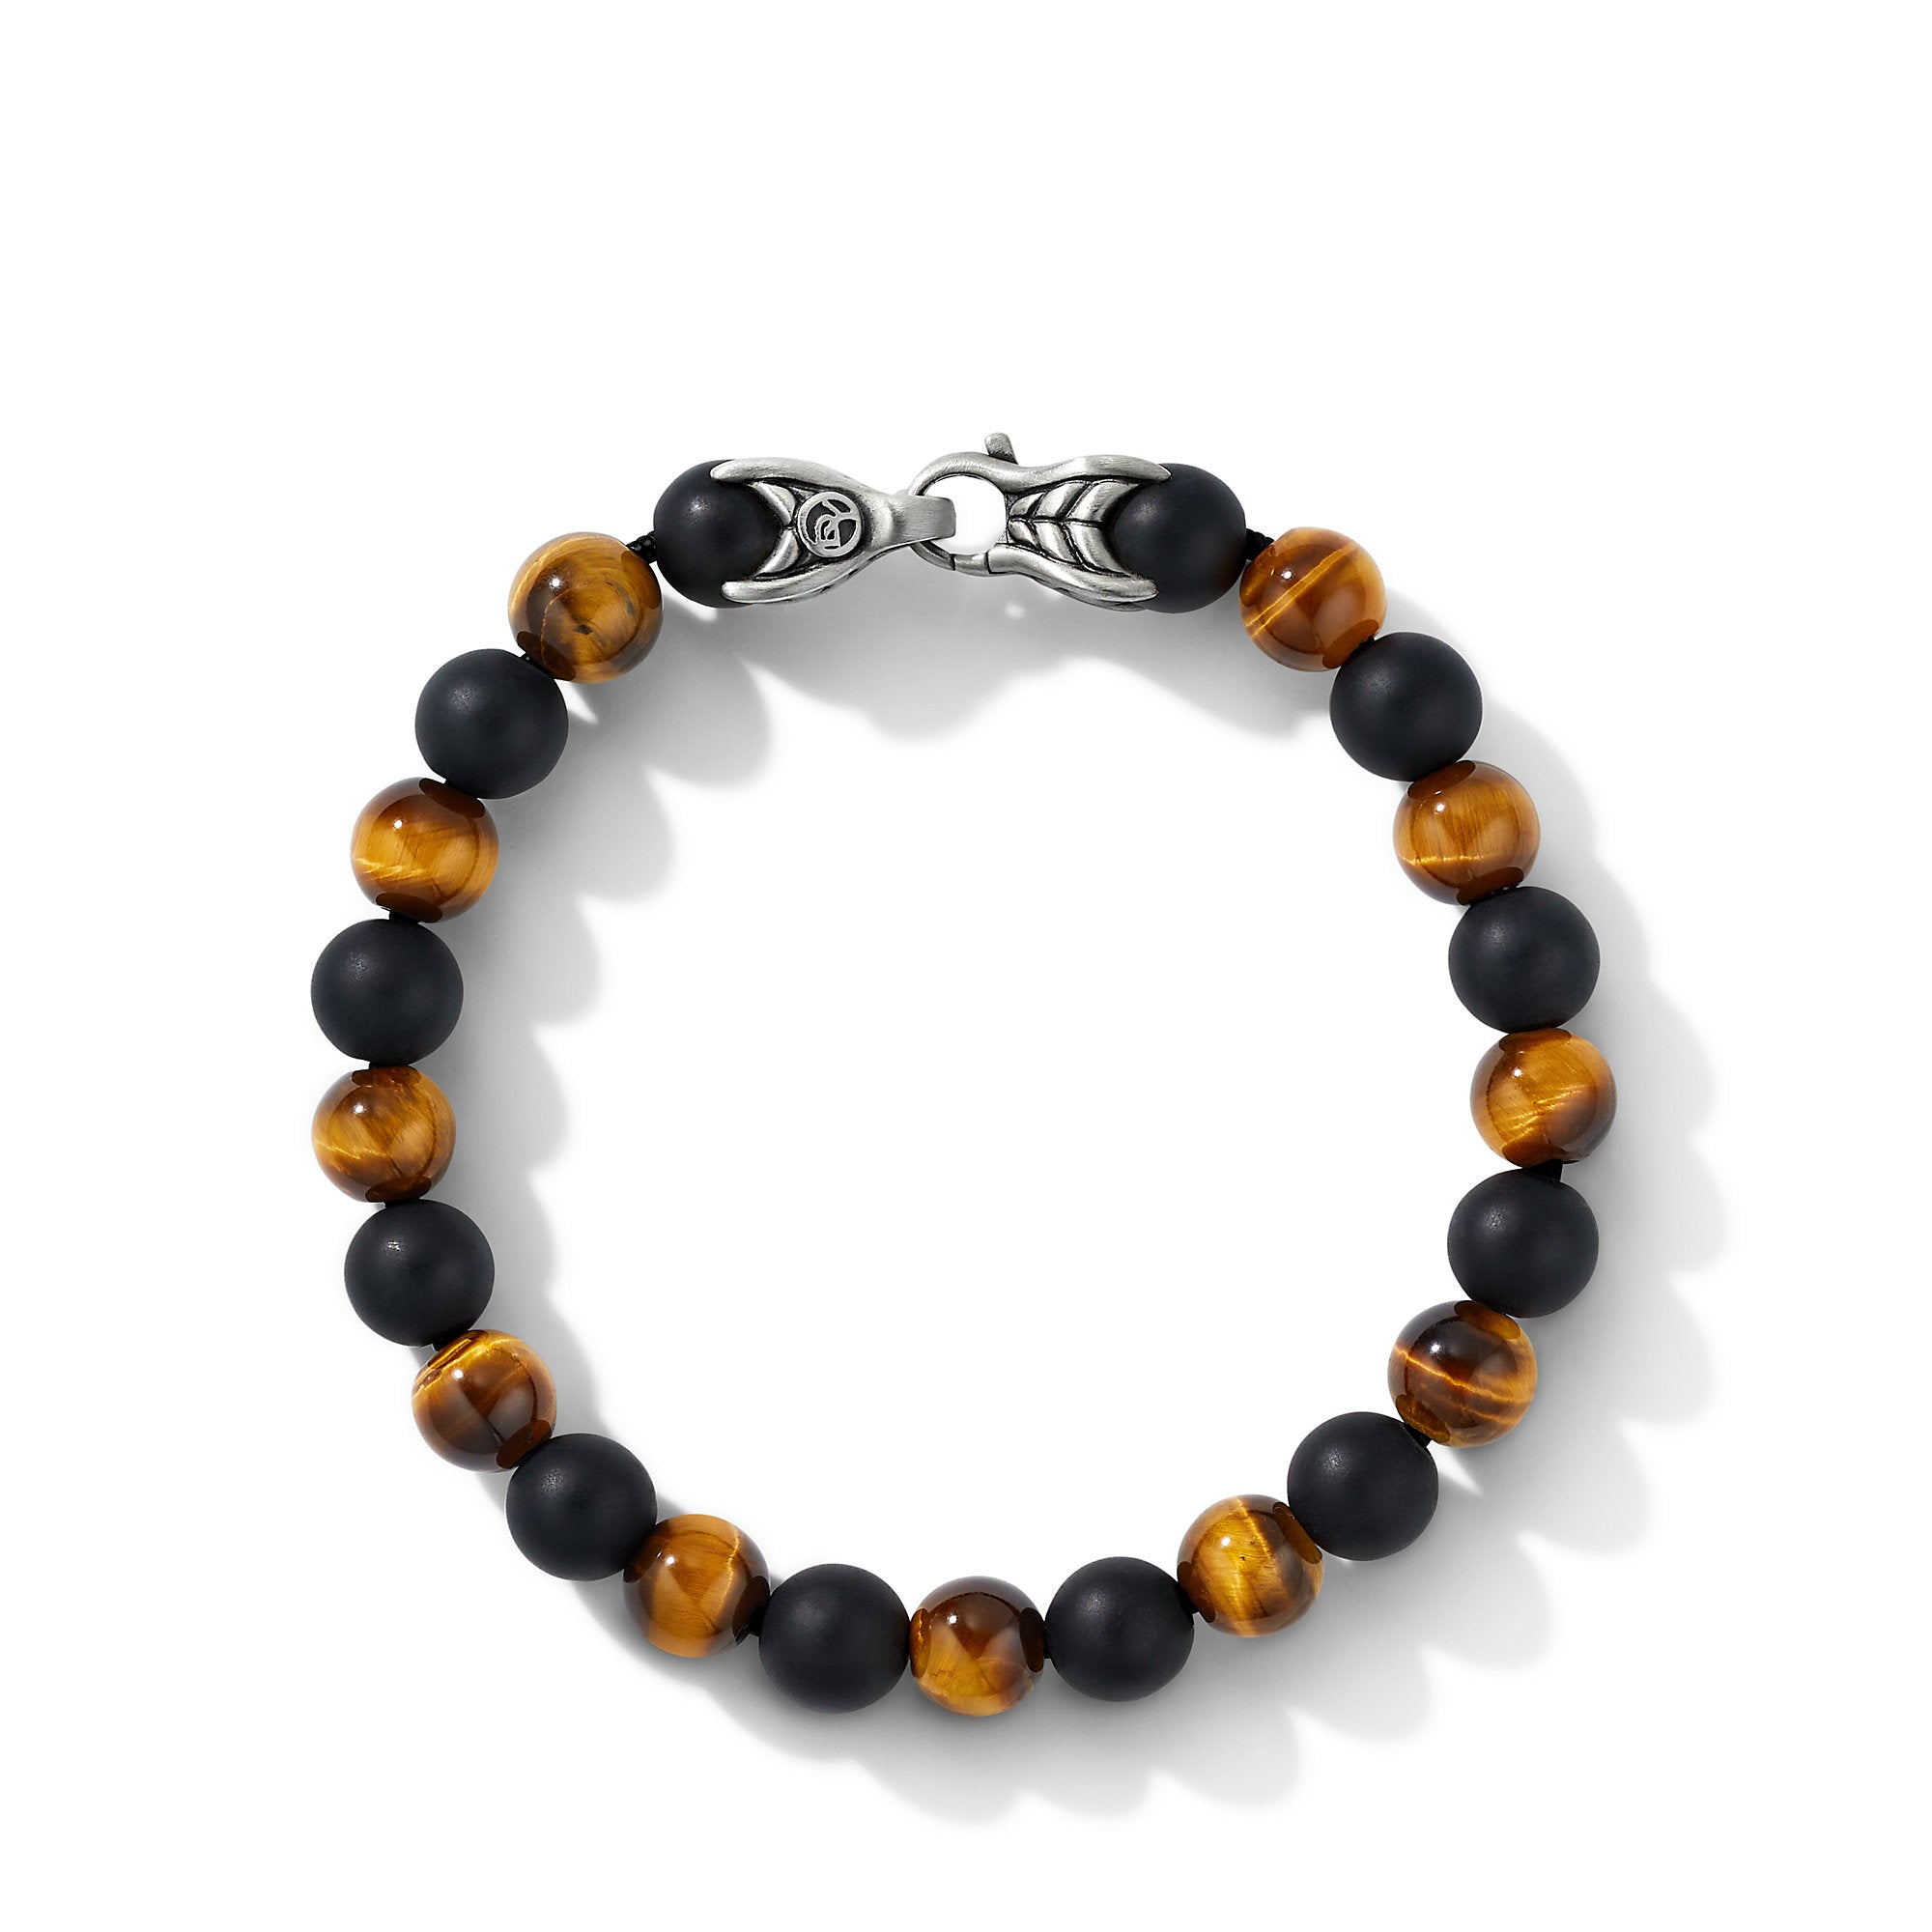 Luxury Men's Bracelet Set Natural Tiger Eye & Black Onyx Beads | Jfm, 6.7 (17cm)